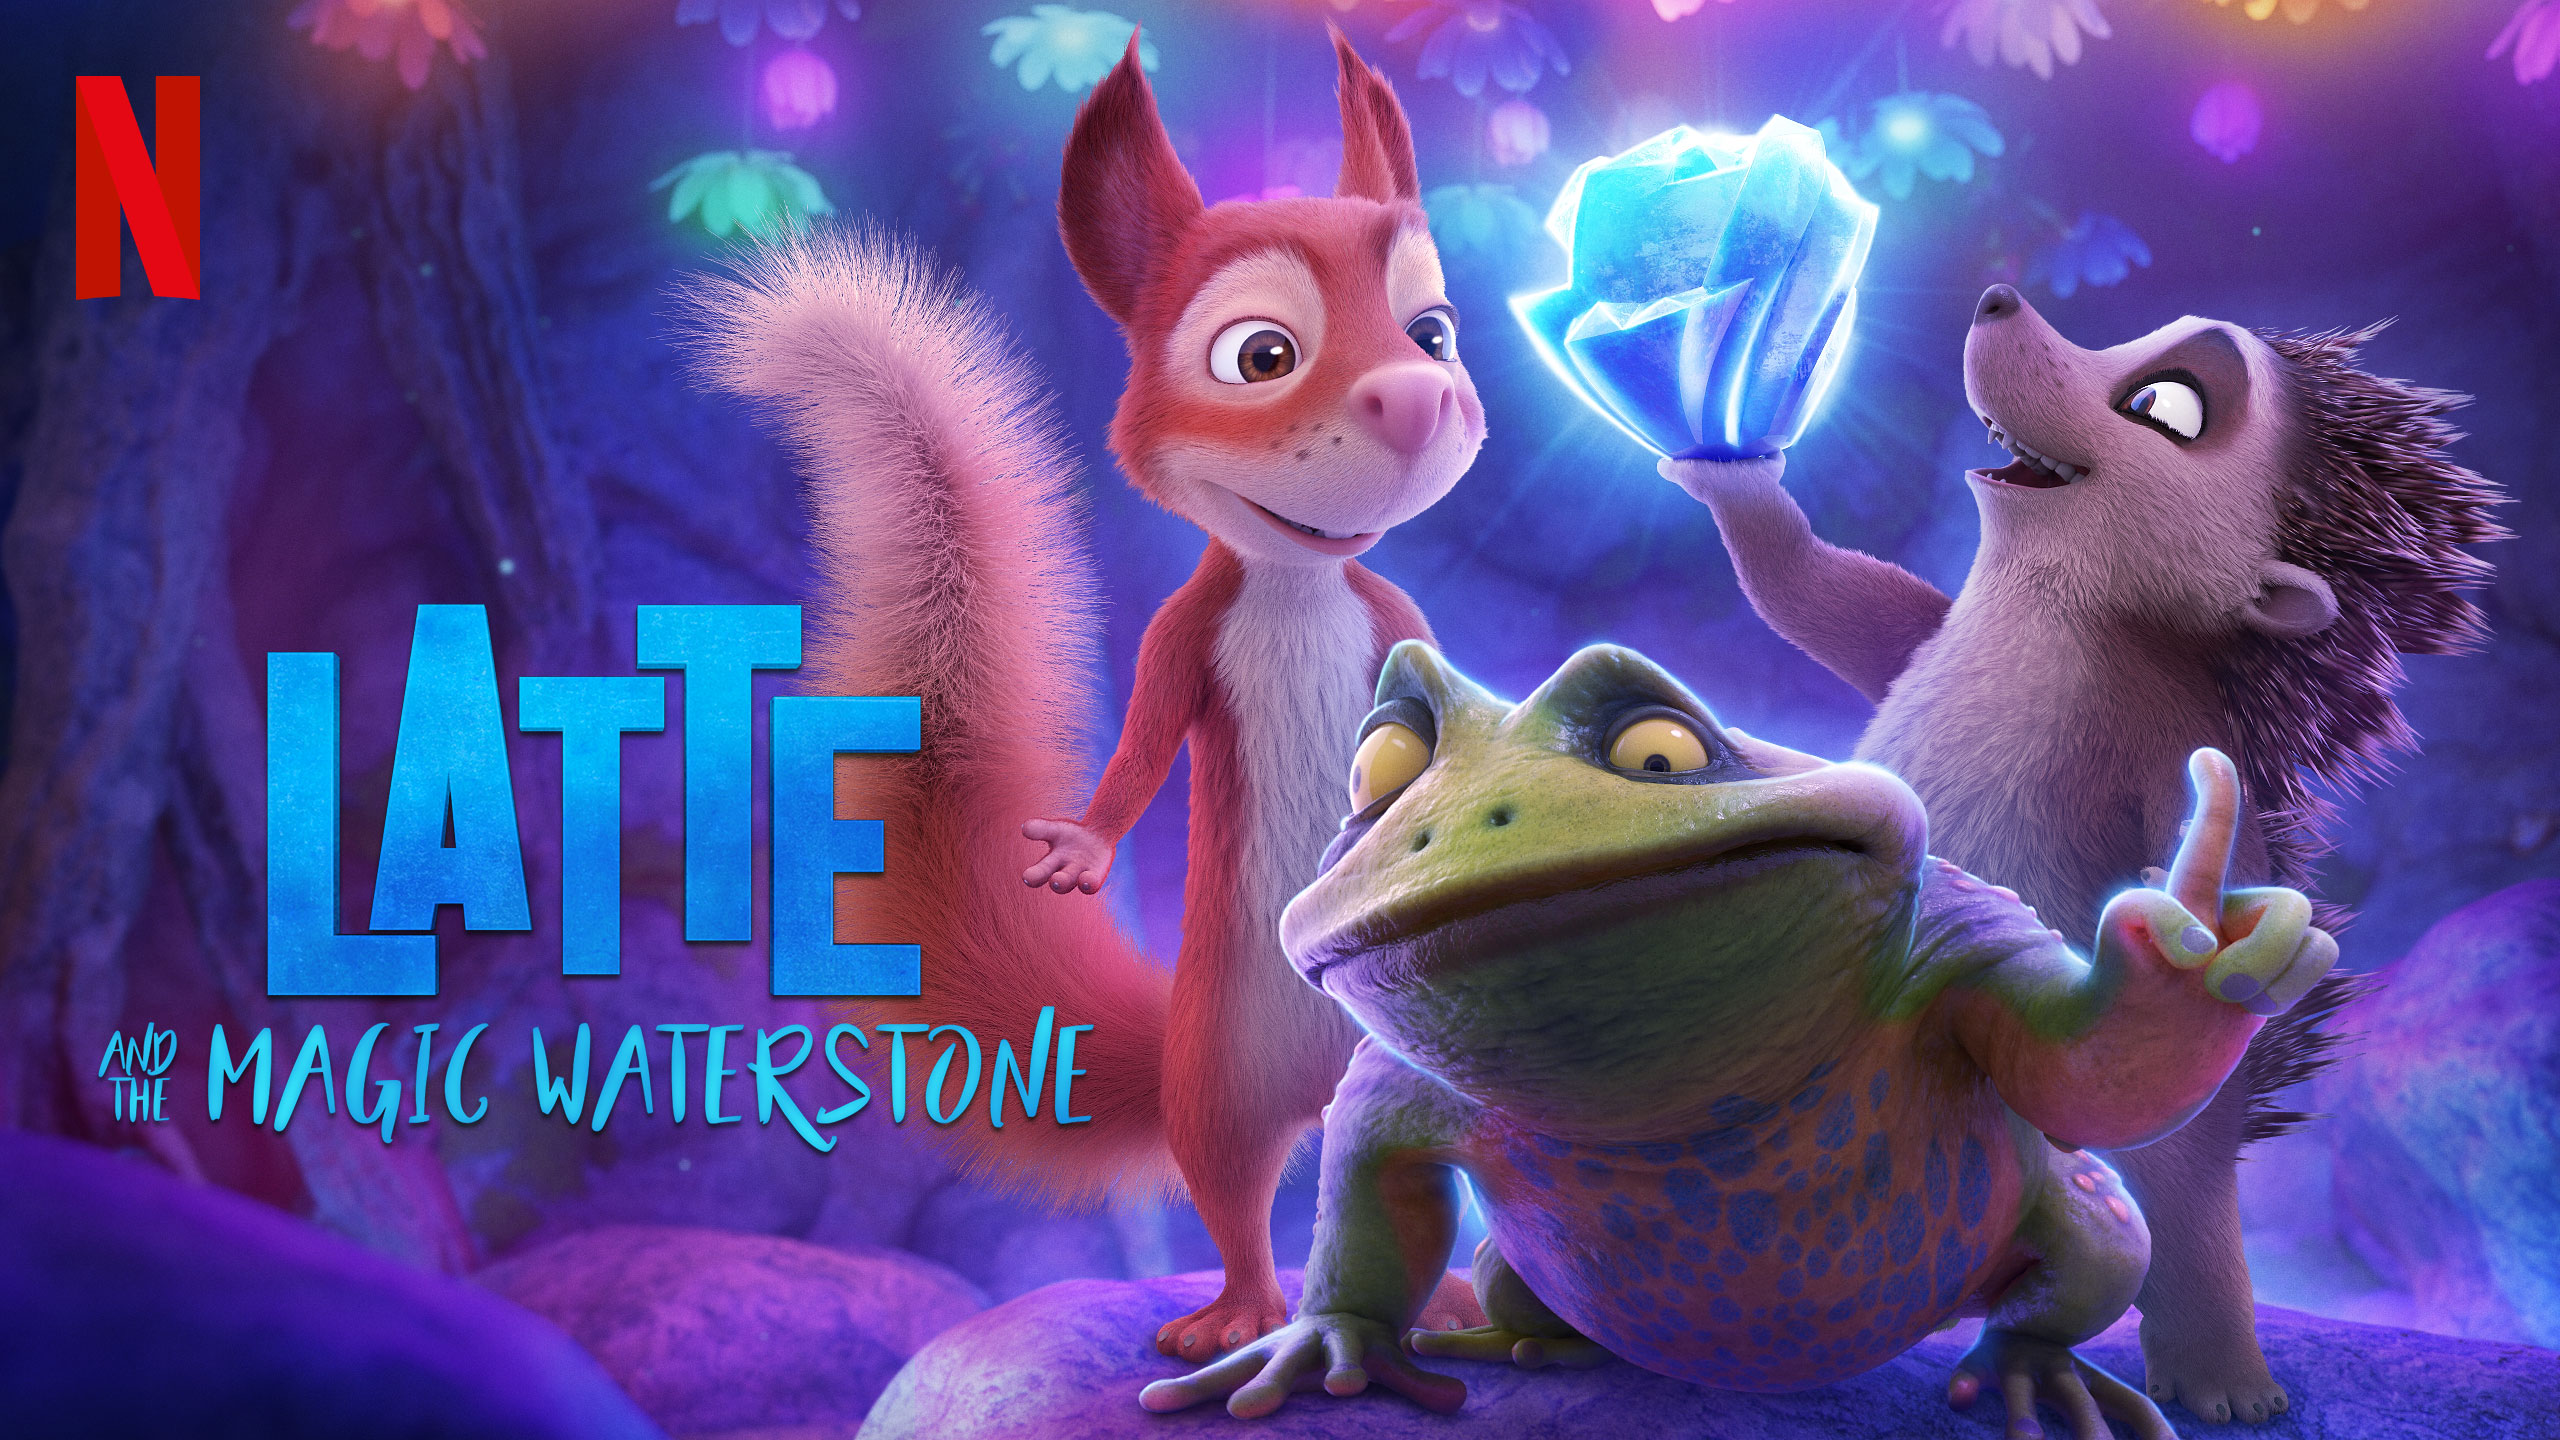 Latte and the Magic Waterstone | Netflix HDA Concept, Finishing & Illustration